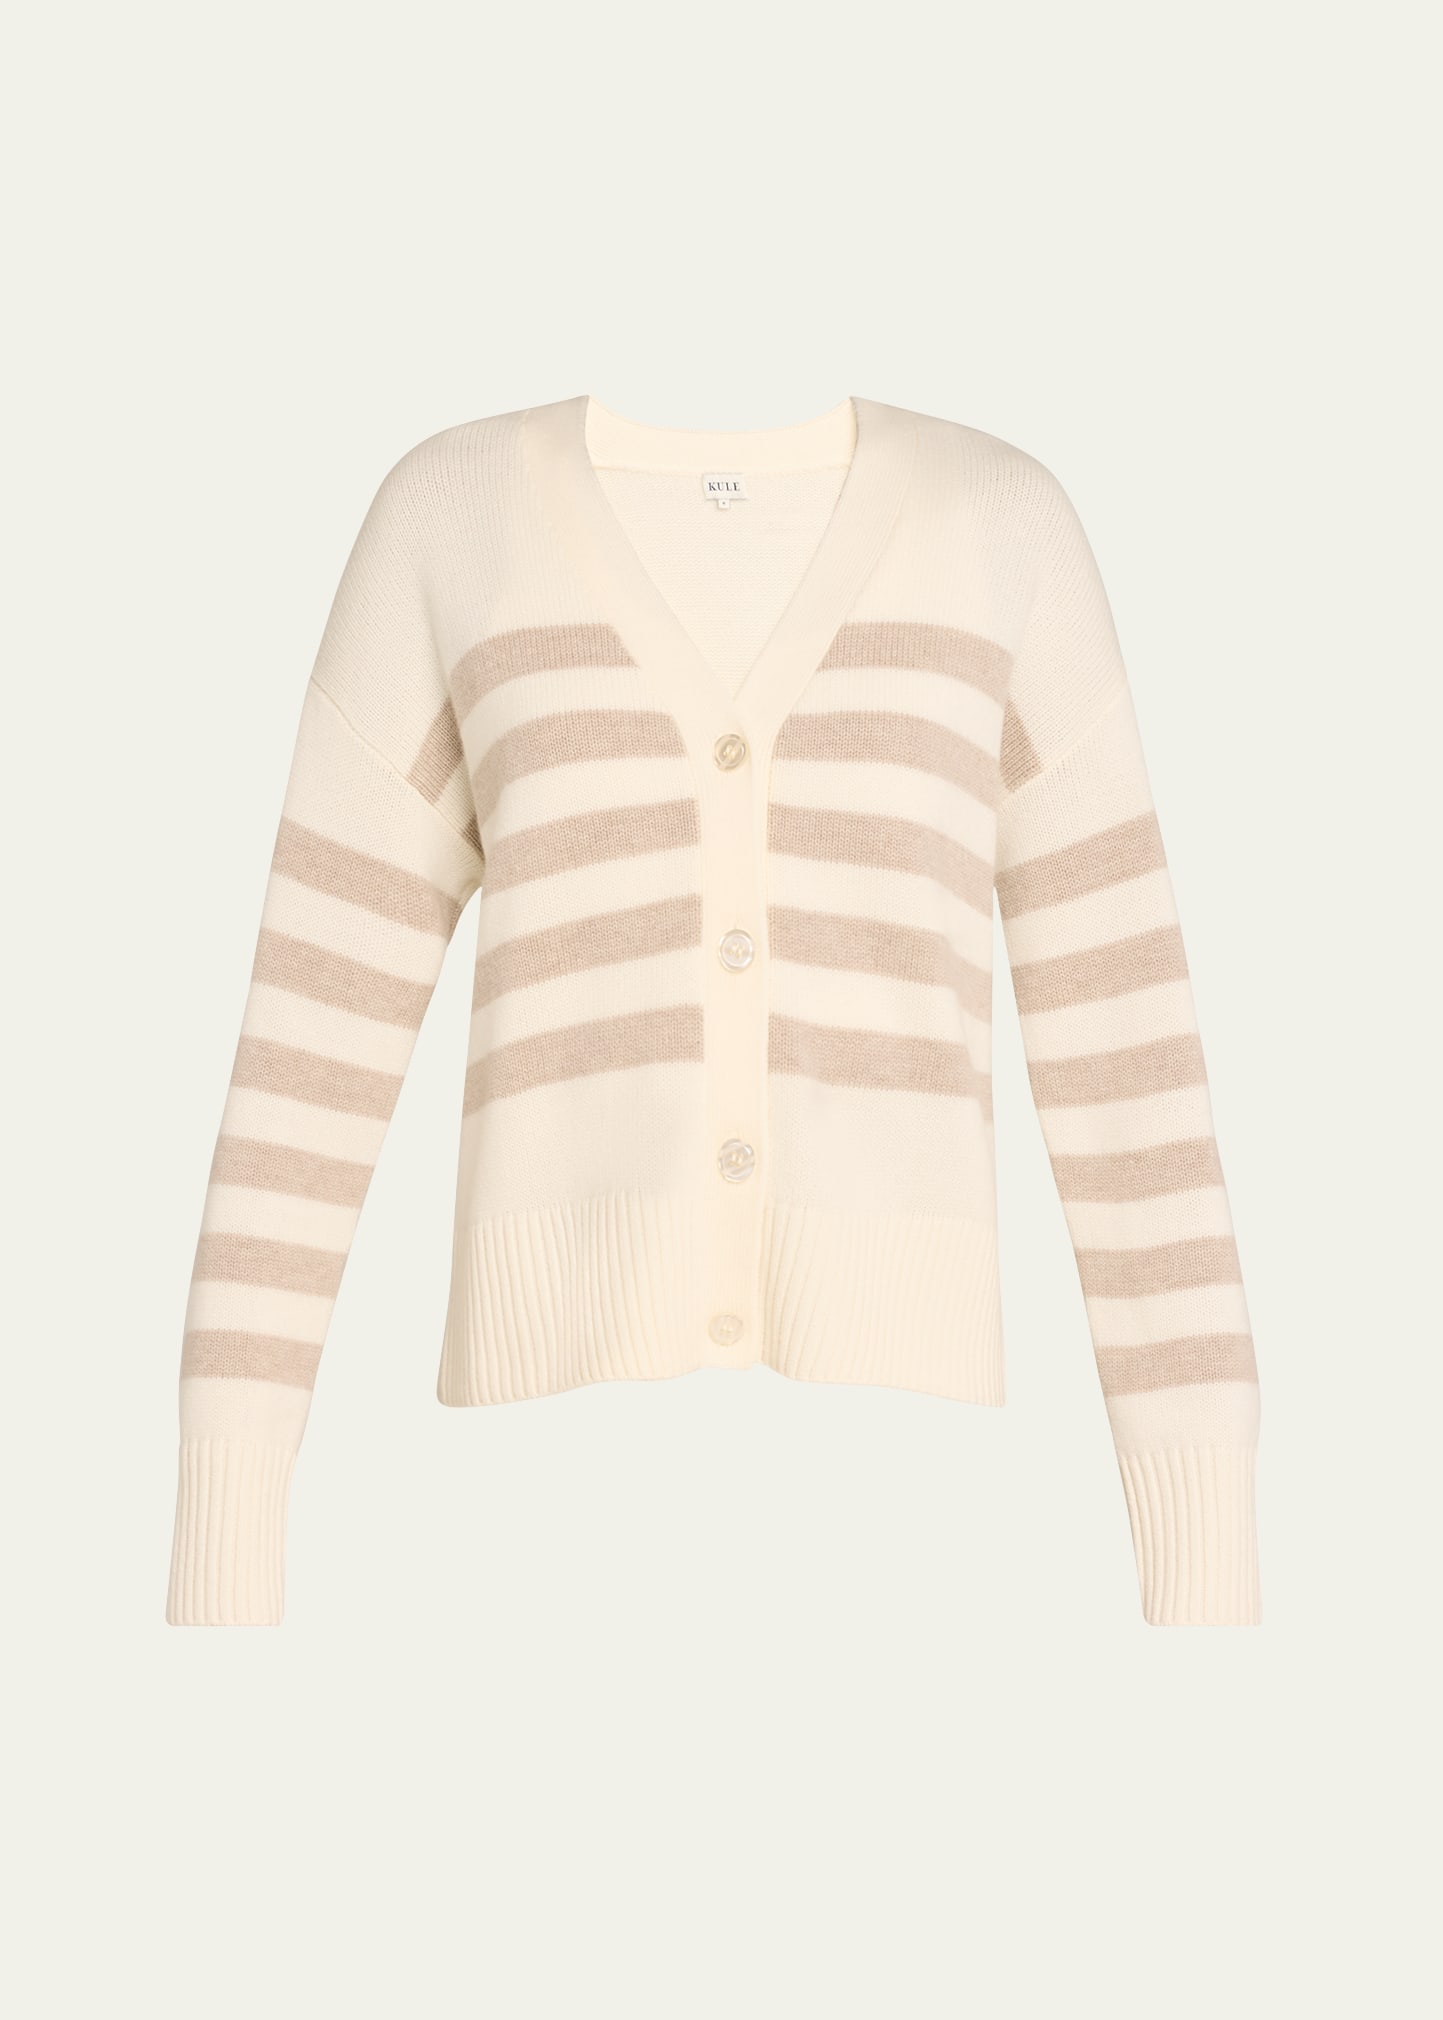 The Raffa Wool Cashmere Striped Cardigan